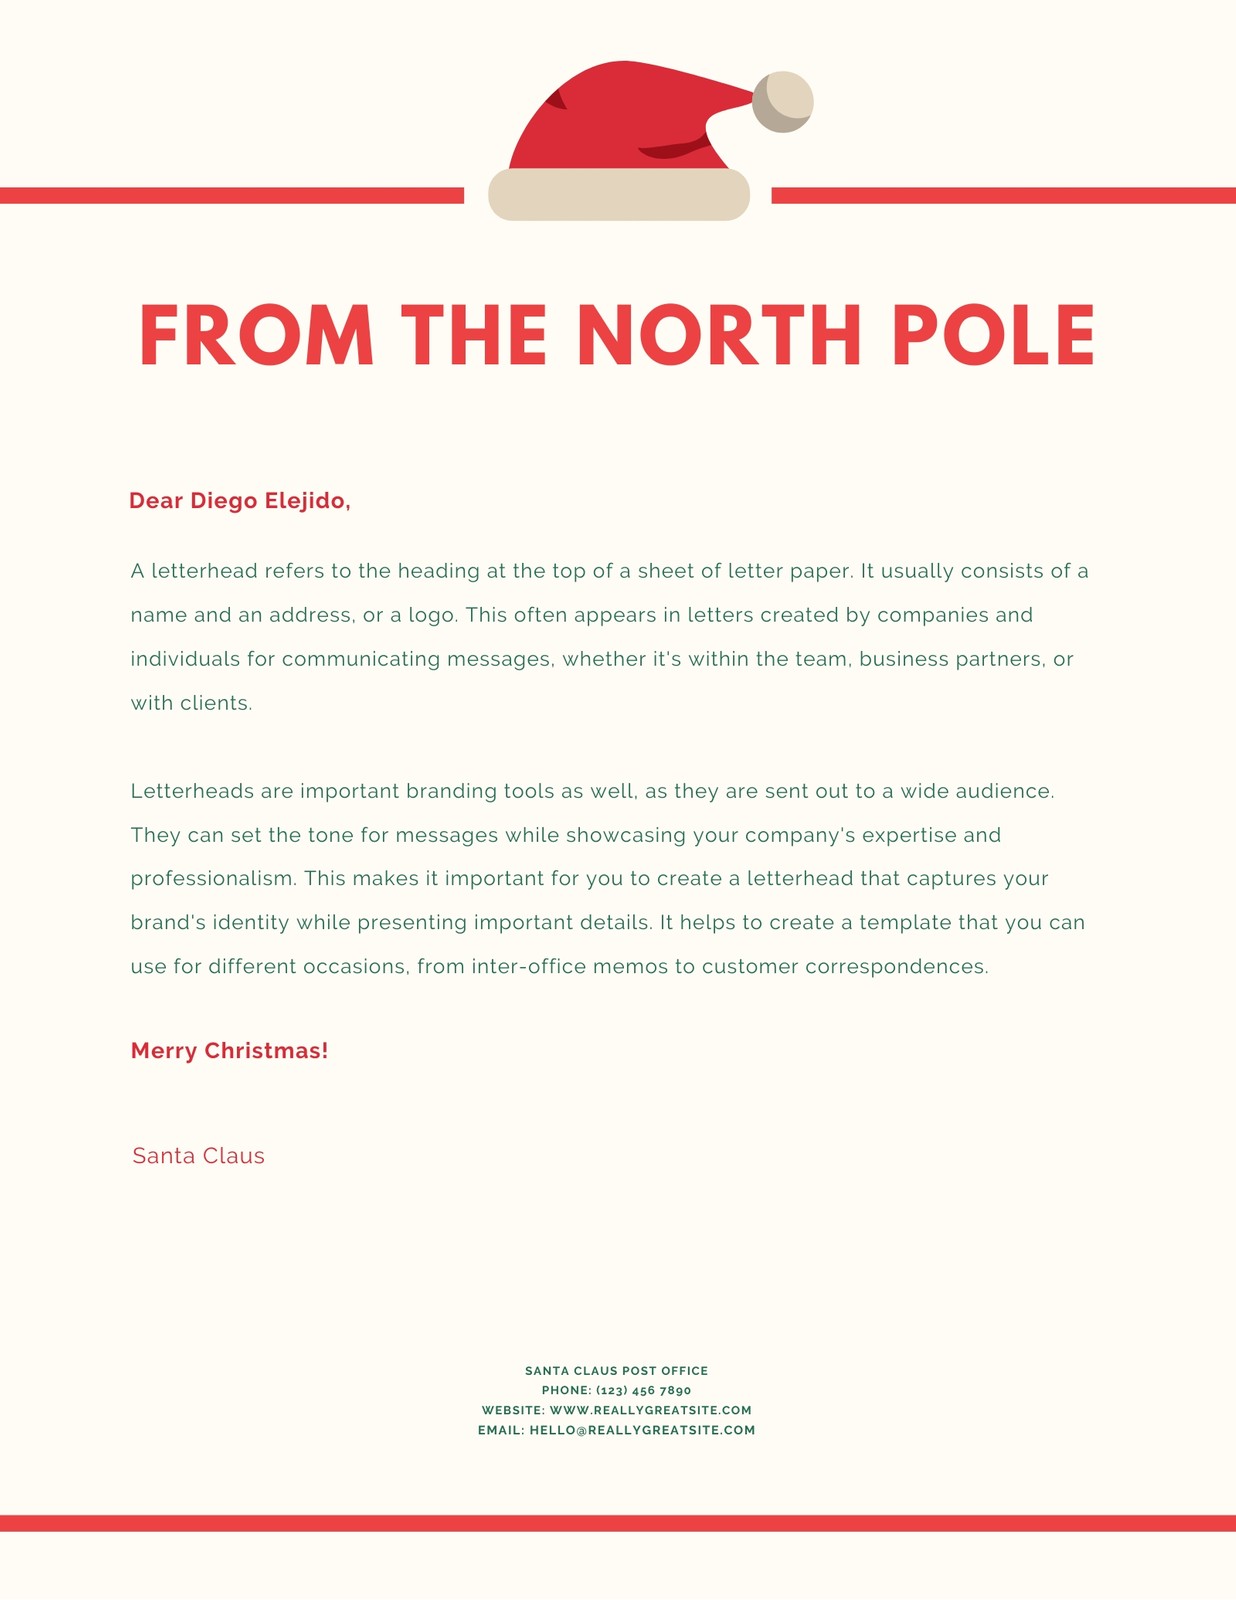 Free printable Santa letter templates you can customize  Canva Regarding Santa Letterhead Template